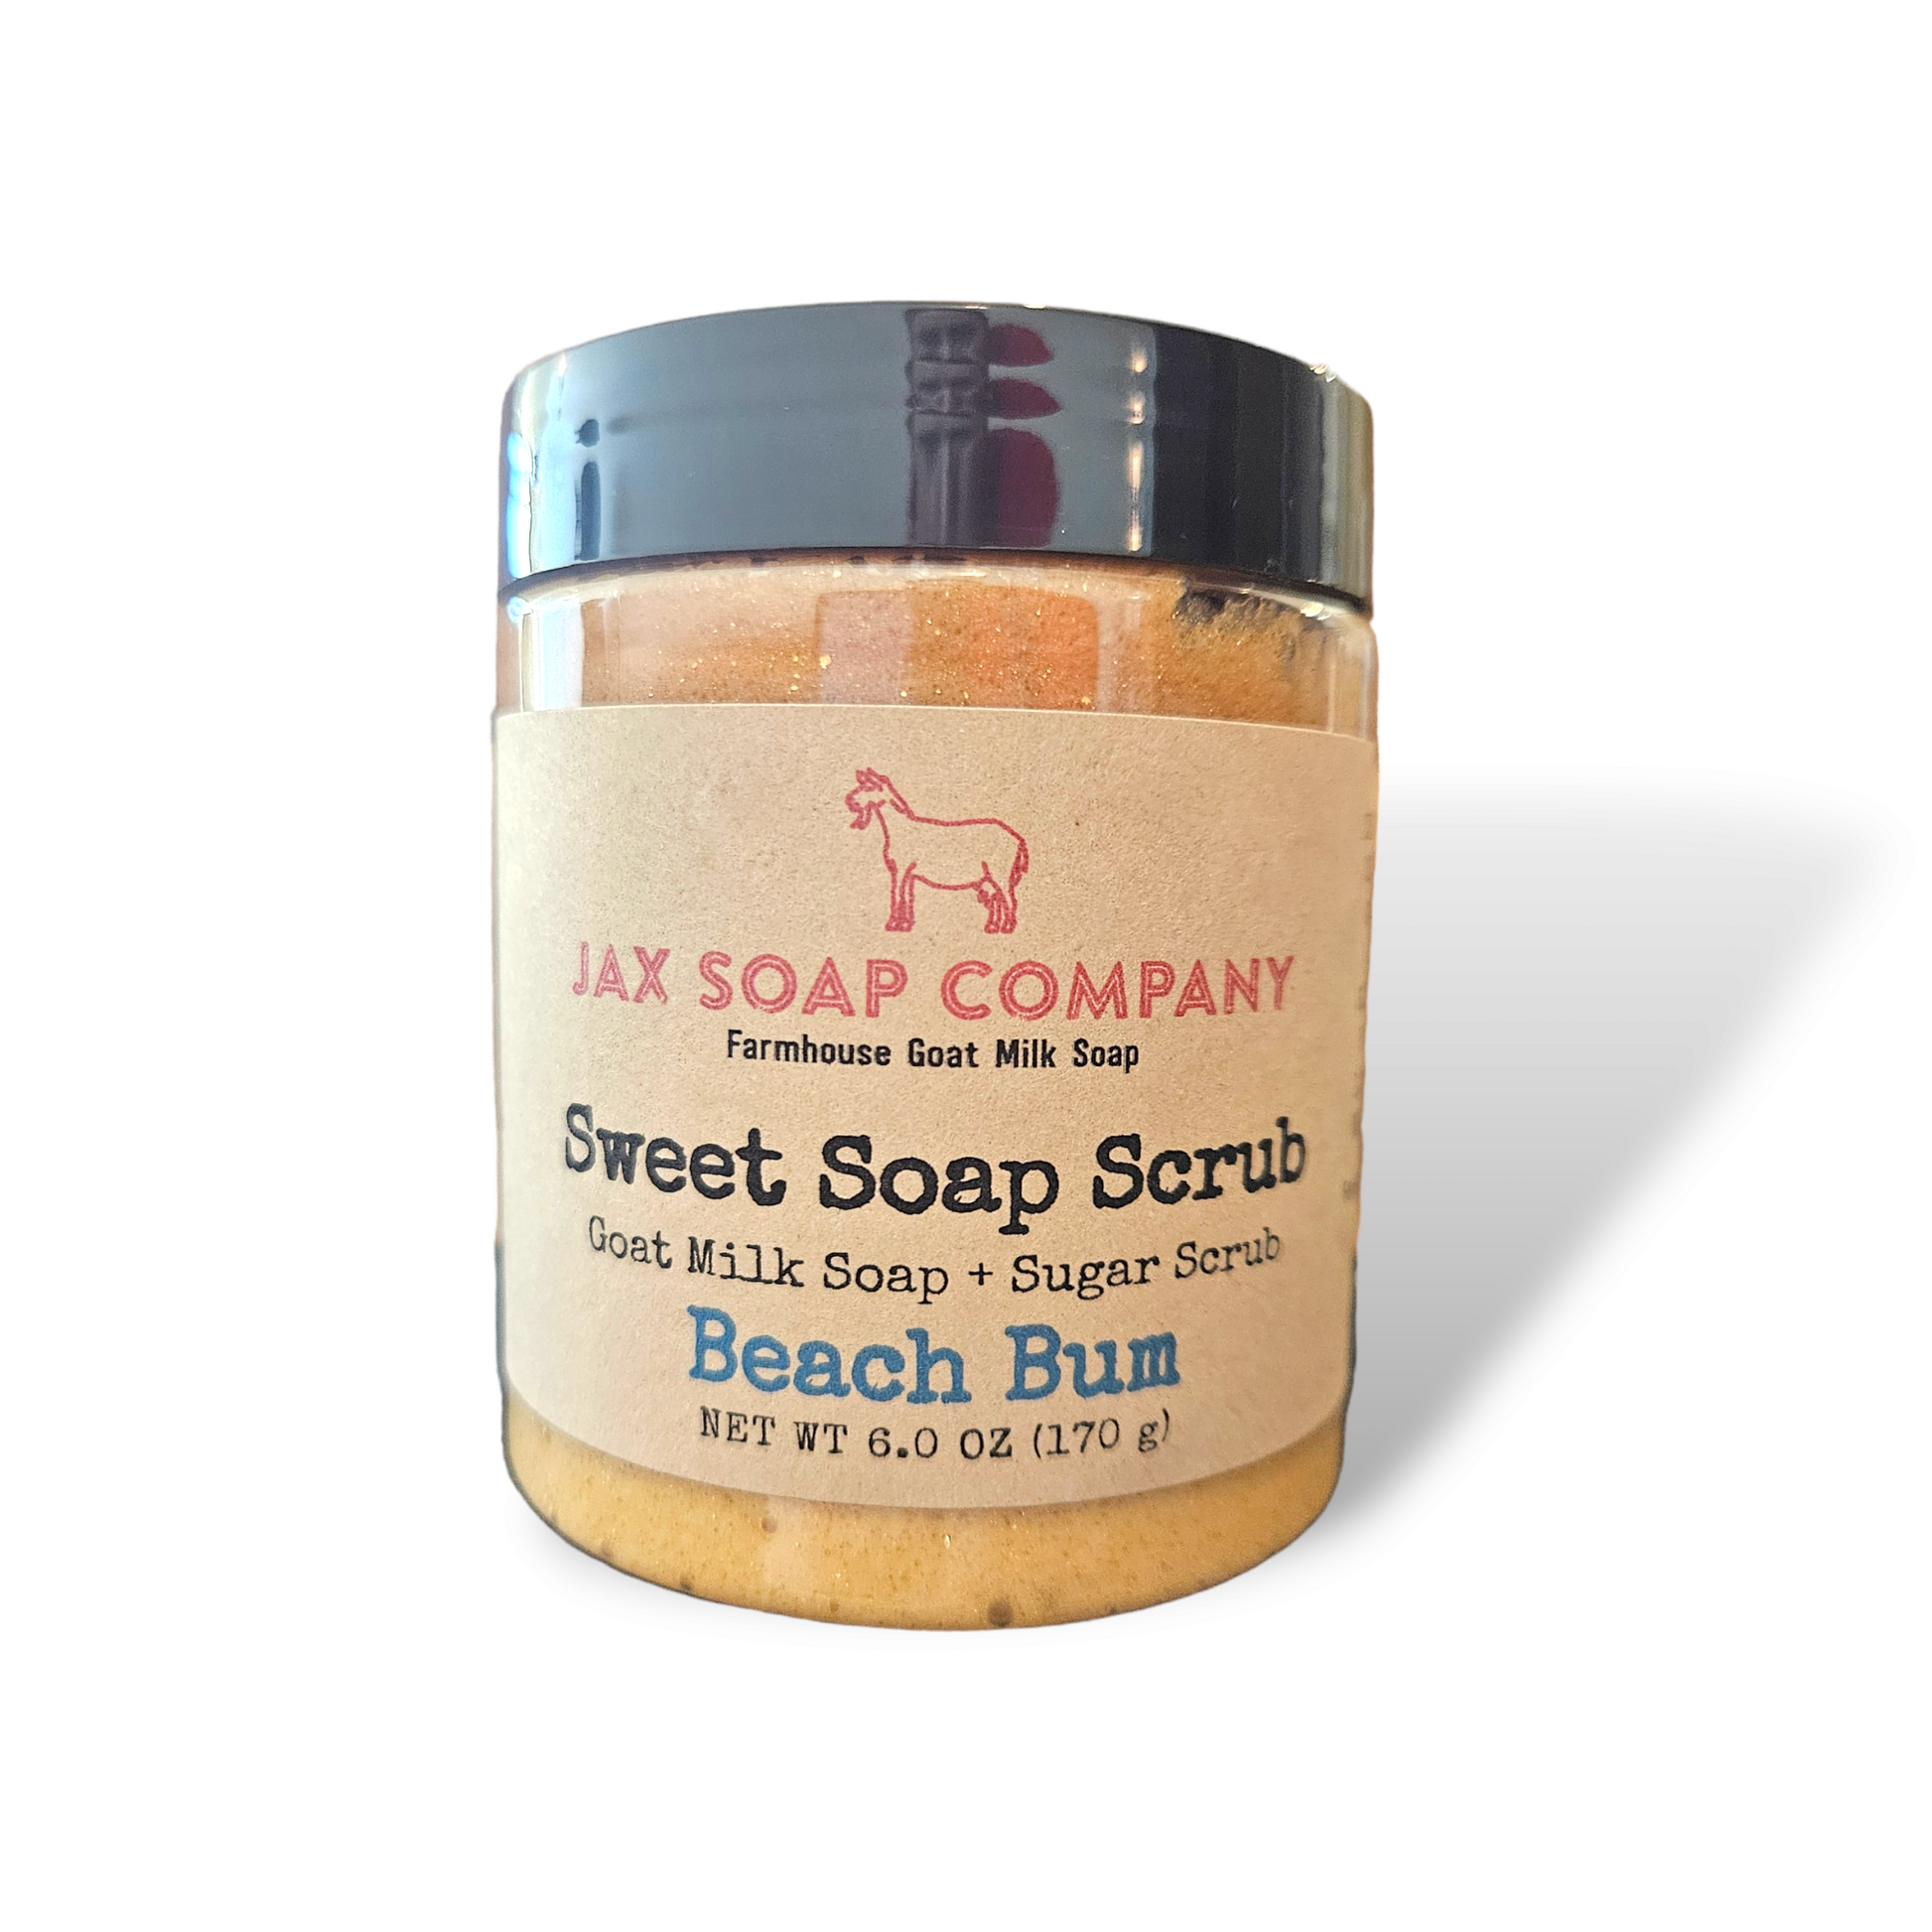 Sweet Soap Scrub Sweet Soap Scrub Jax Soap Company   